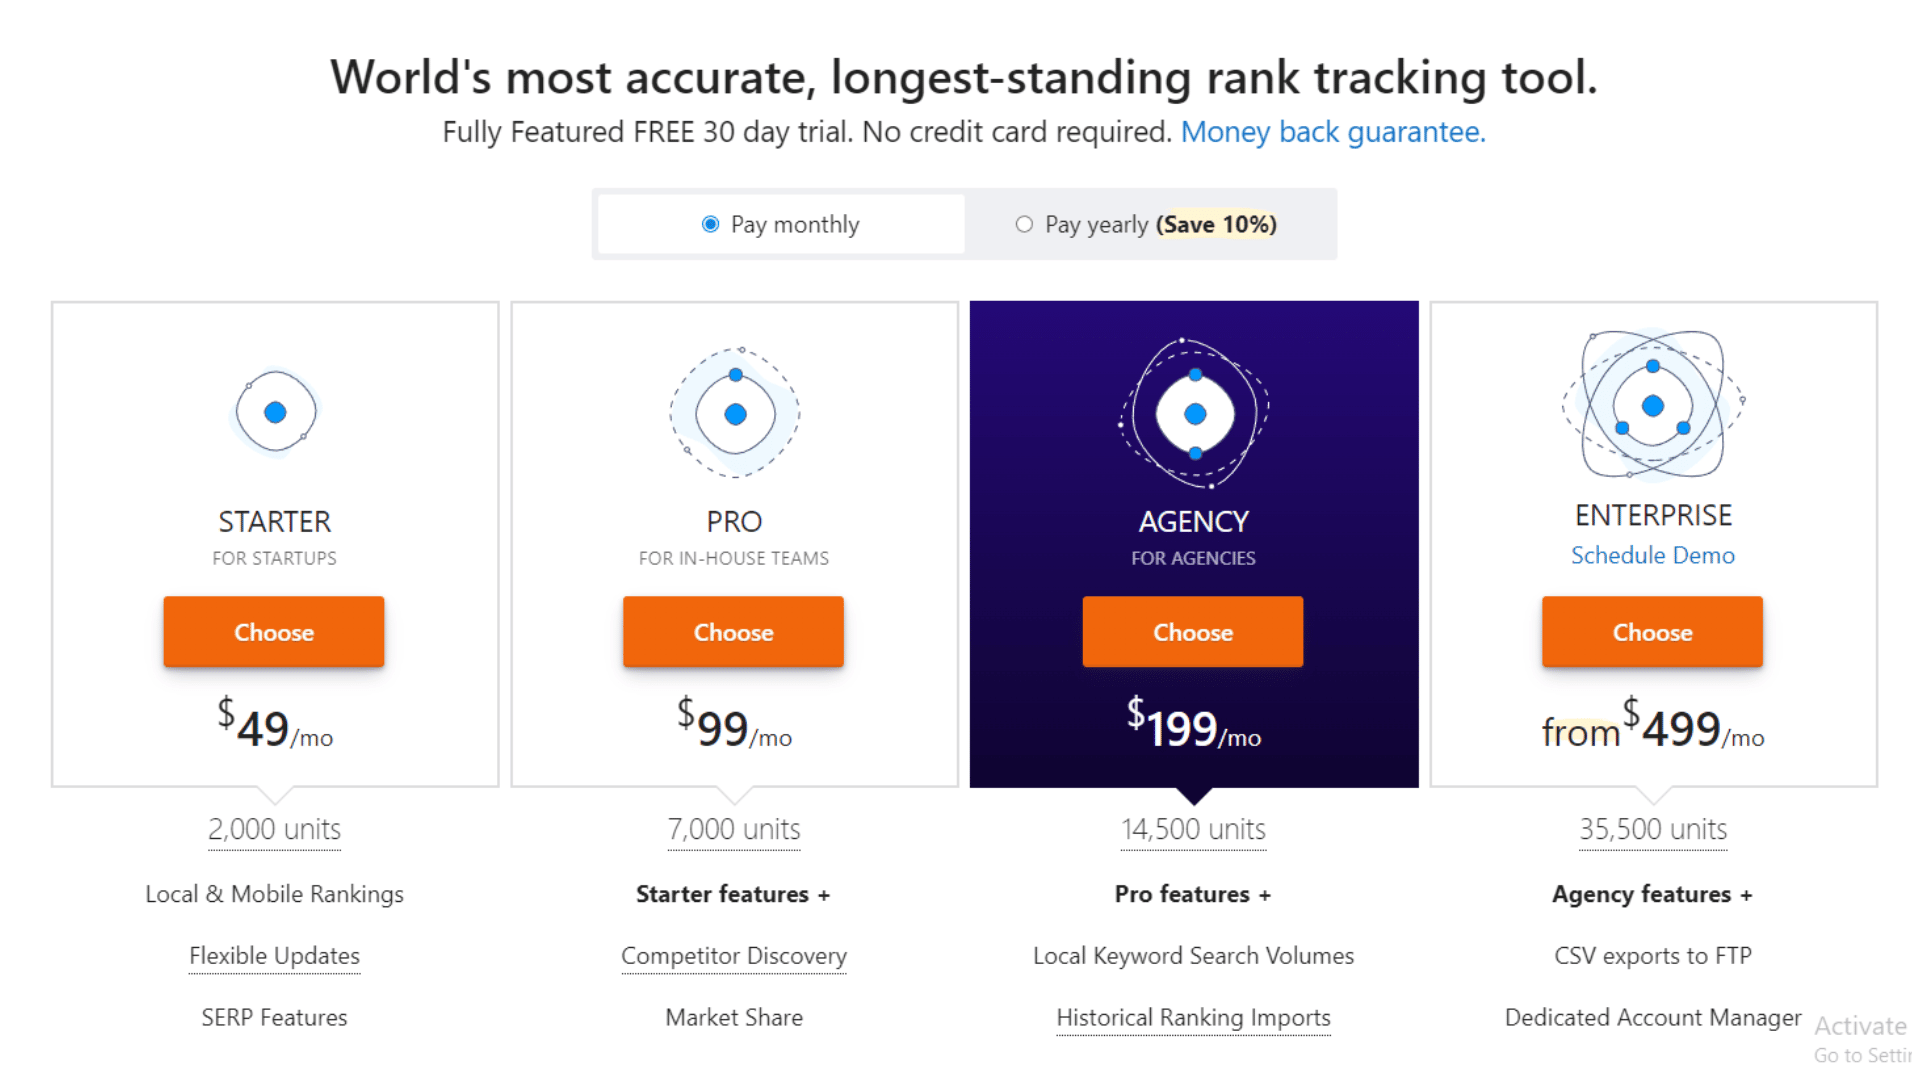 Advanced Web Ranking Pricing